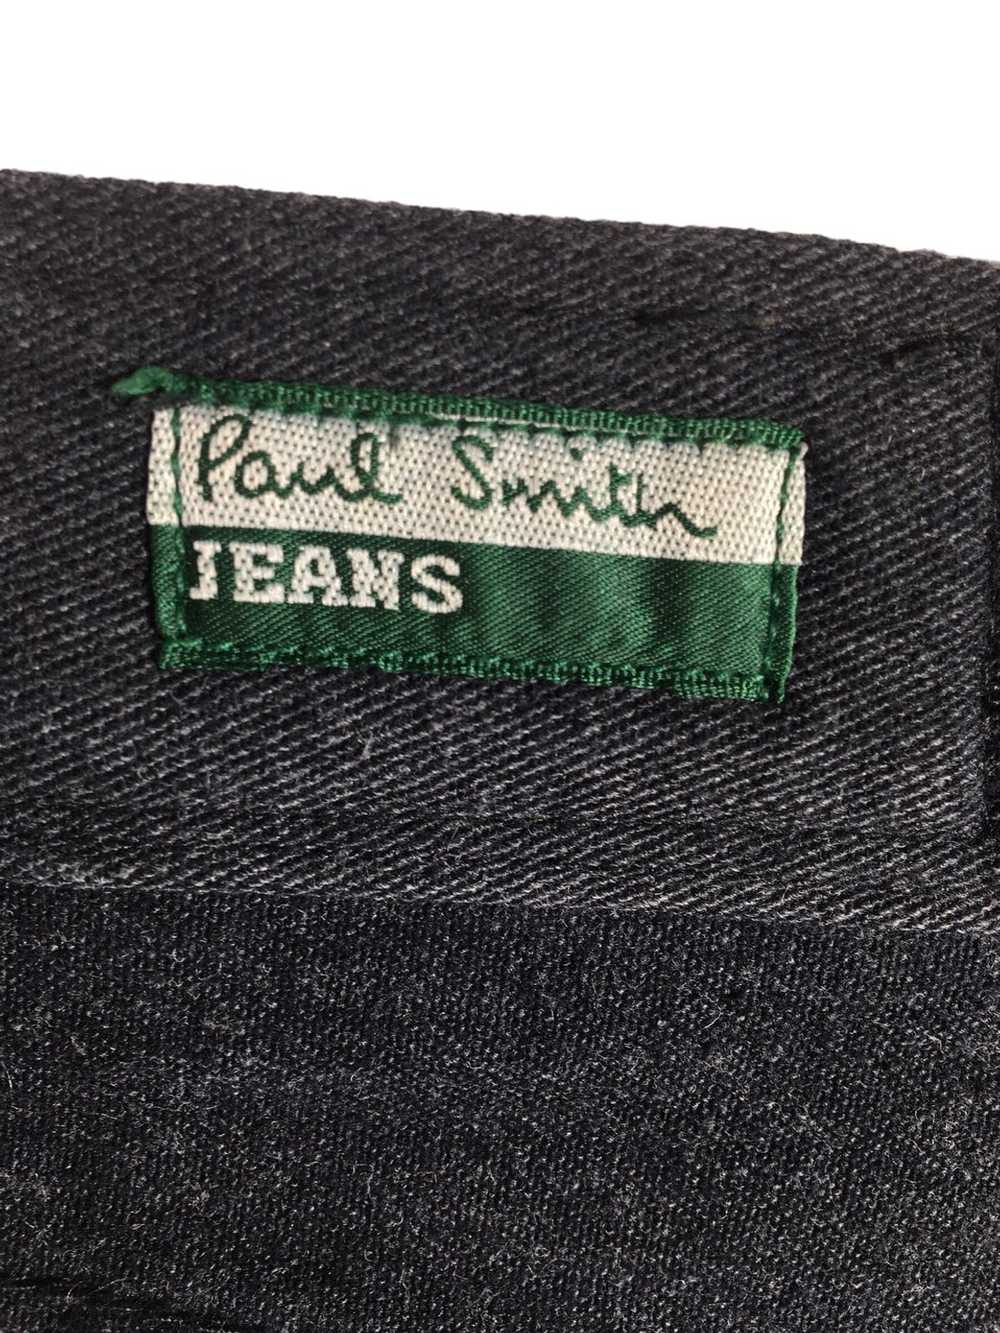 Jean × Paul Smith Vintage Jeans Paul Smith - image 8